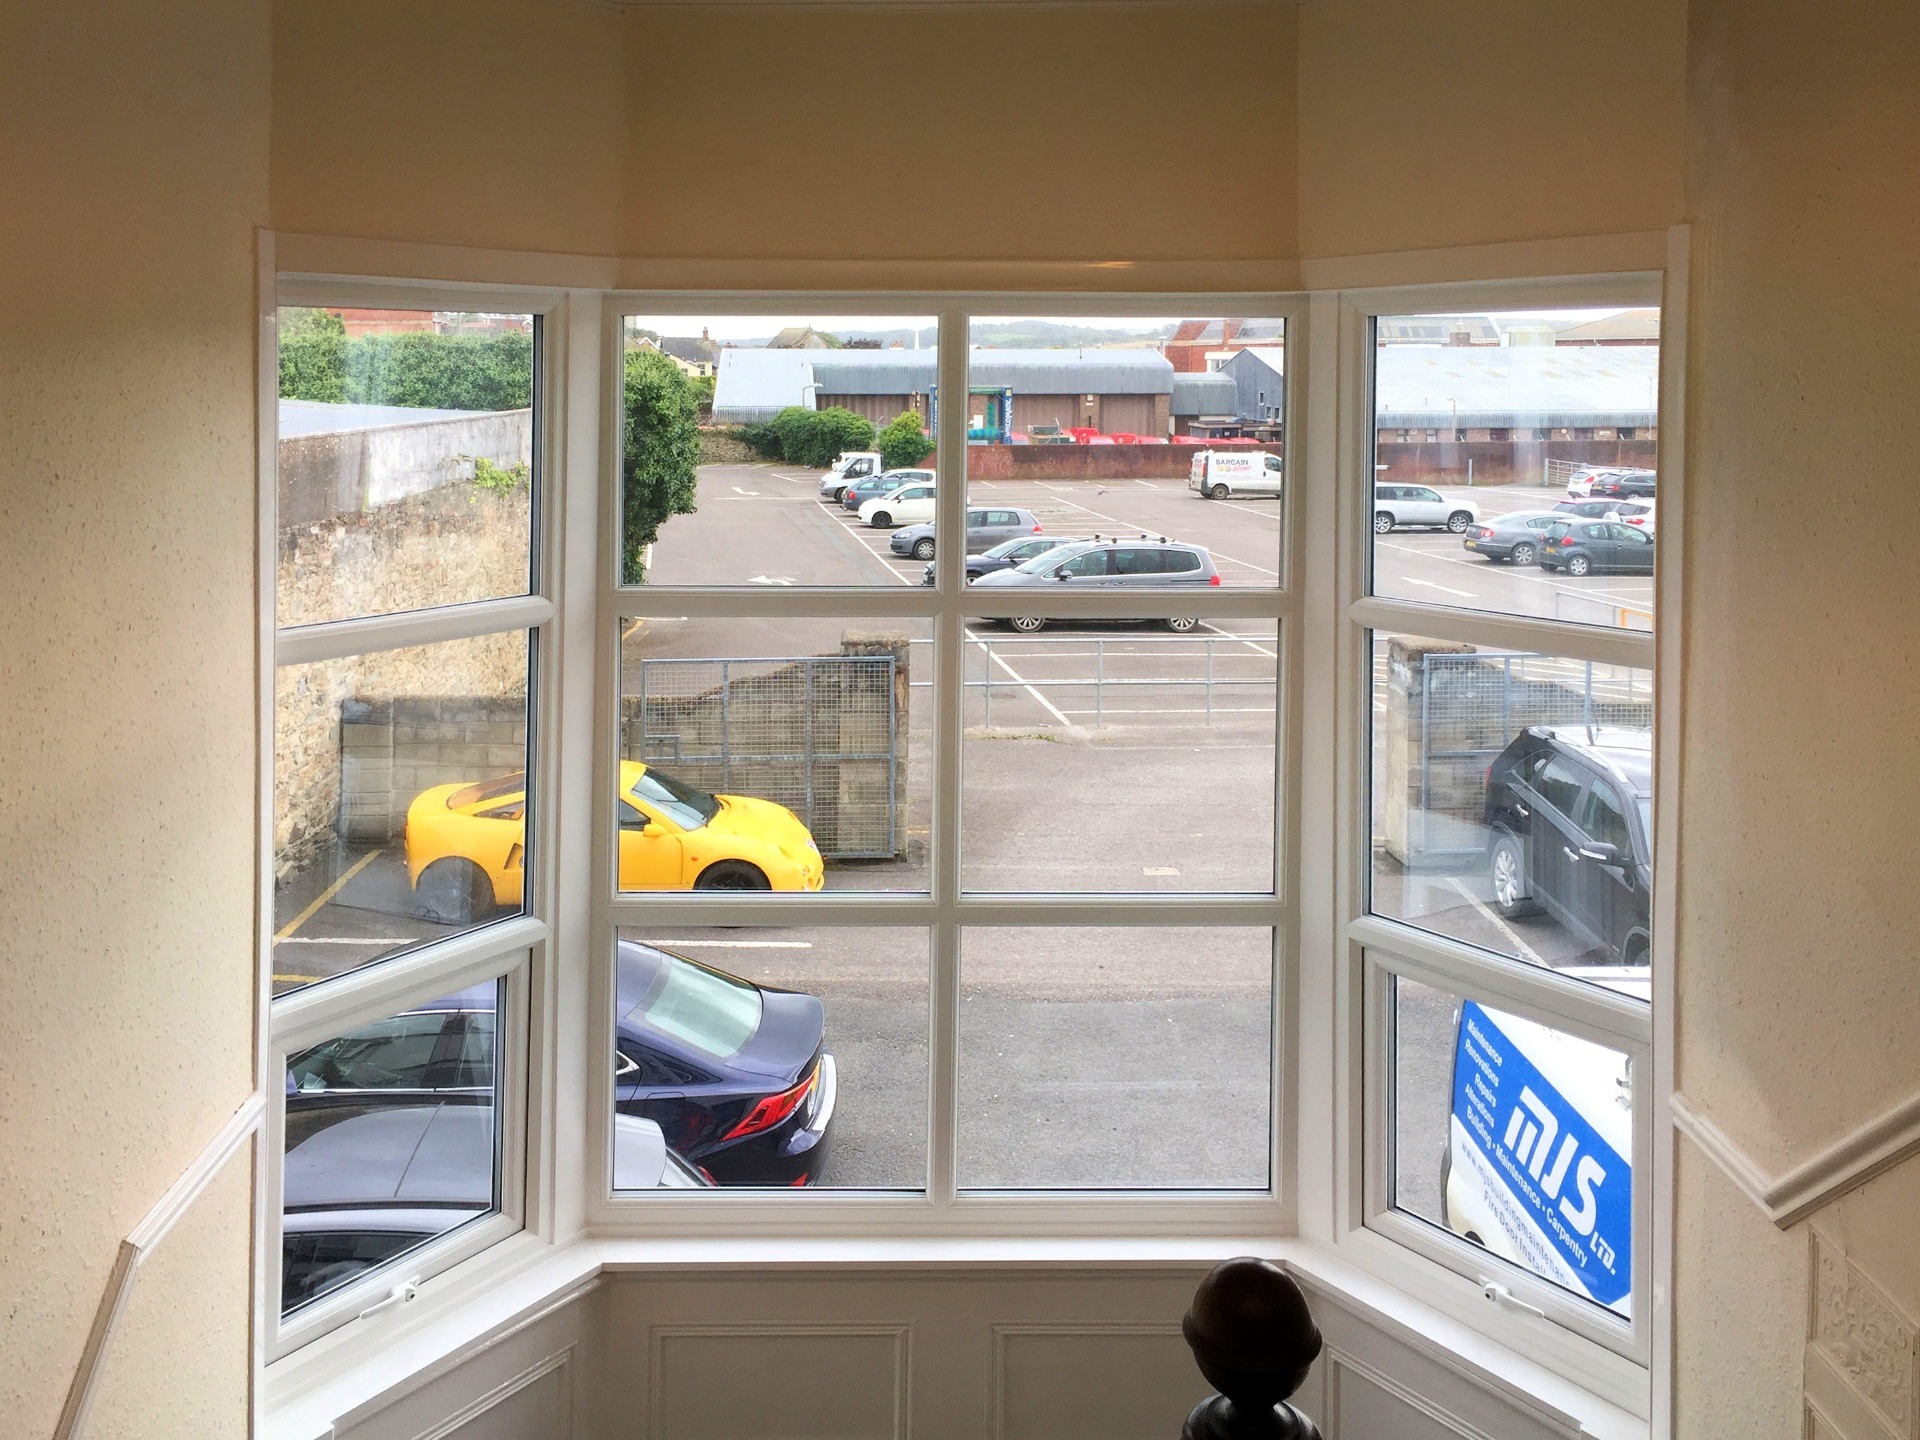 Bay Window, install new sill and match decorations. Barnstaple North Devon